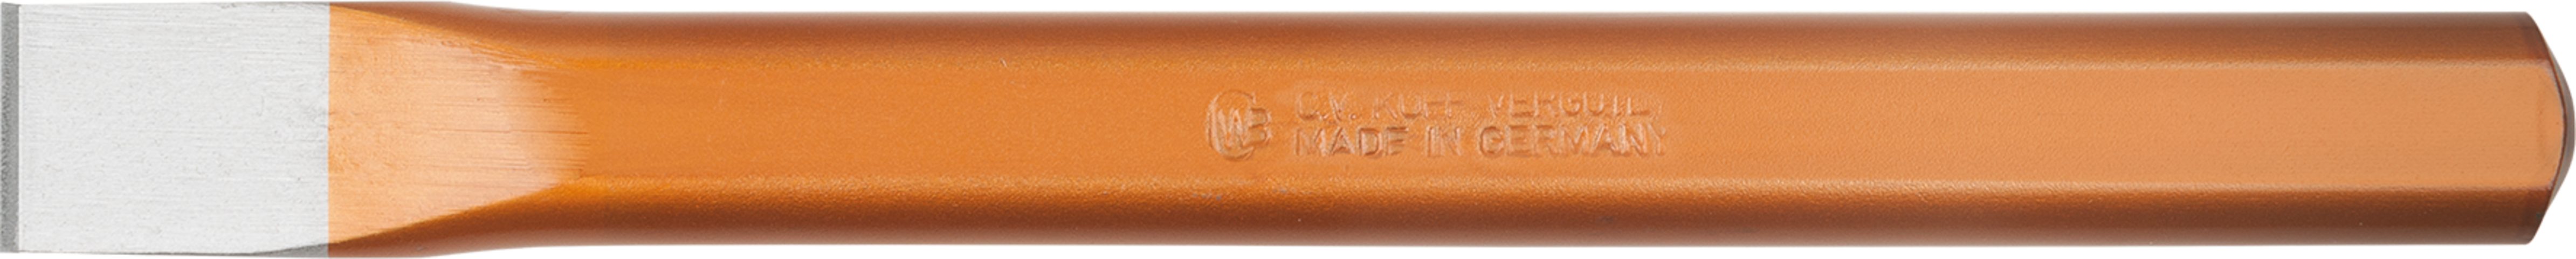 SW-STAHL Flachmeißel 94504L Flachmeißel 250 mm aus Chrom-Vanadium-Stahl, (1-tlg) lackiert